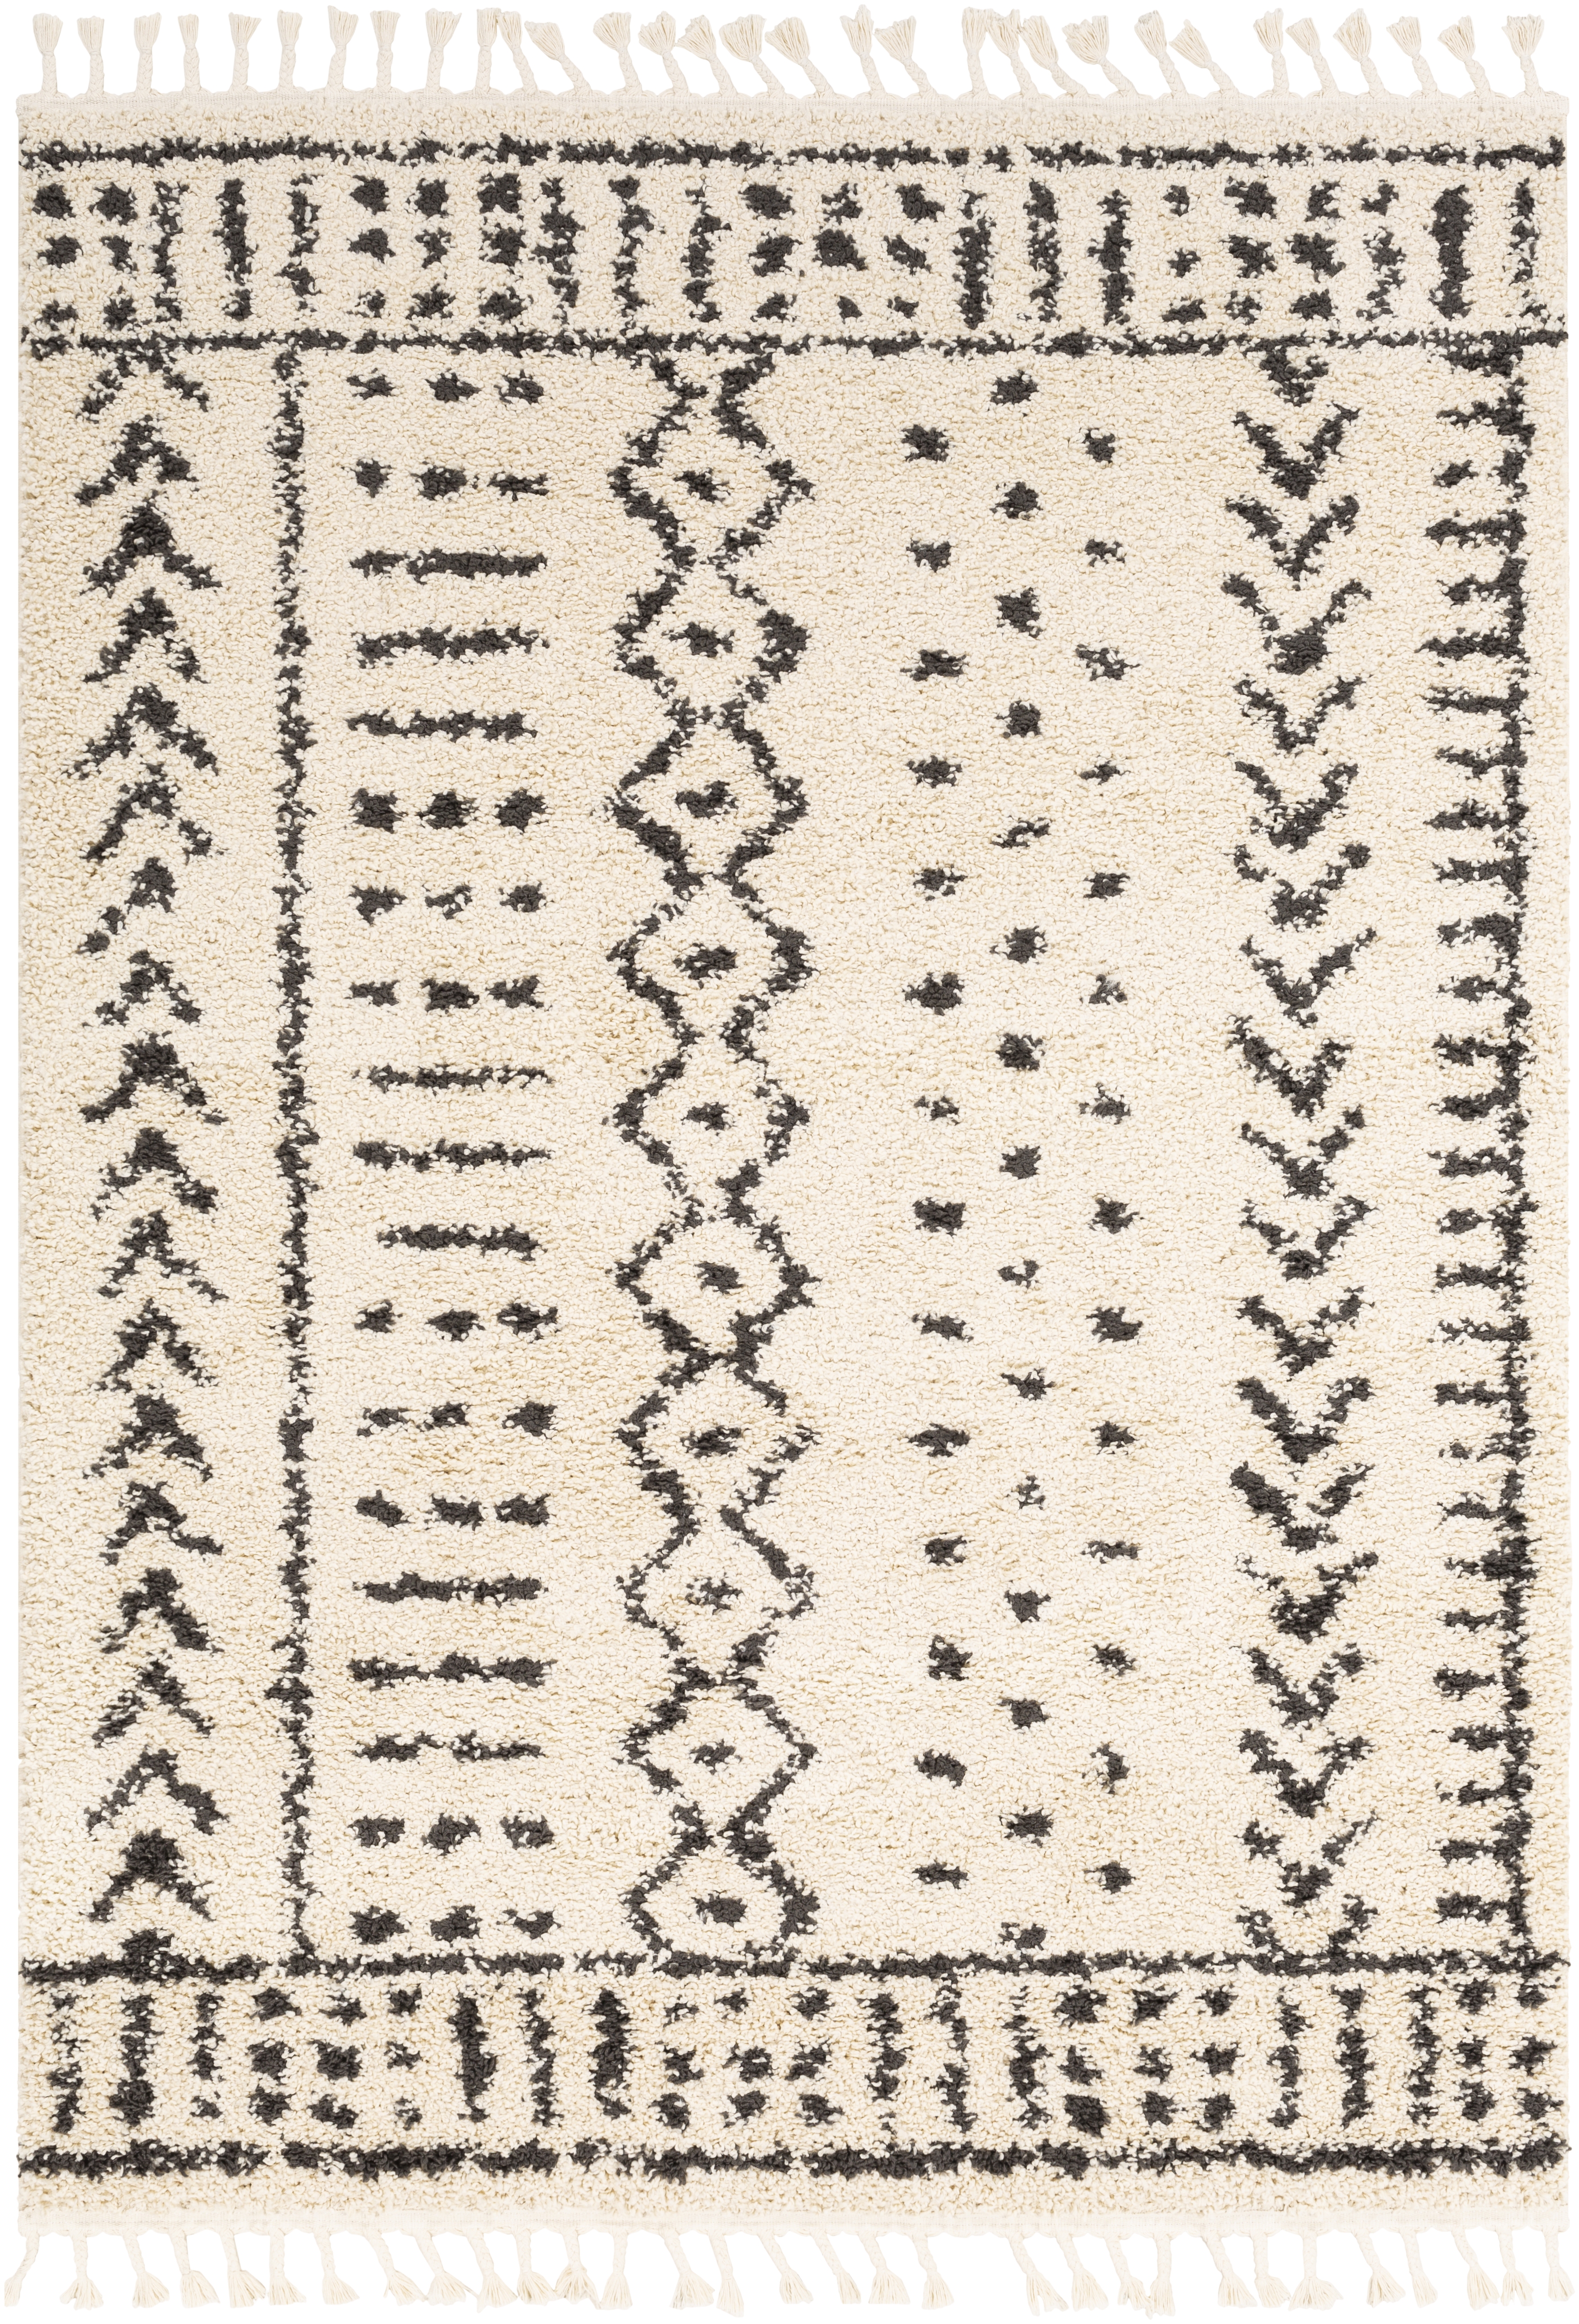 Berber Shag Rug, 9' x 12' - Image 0